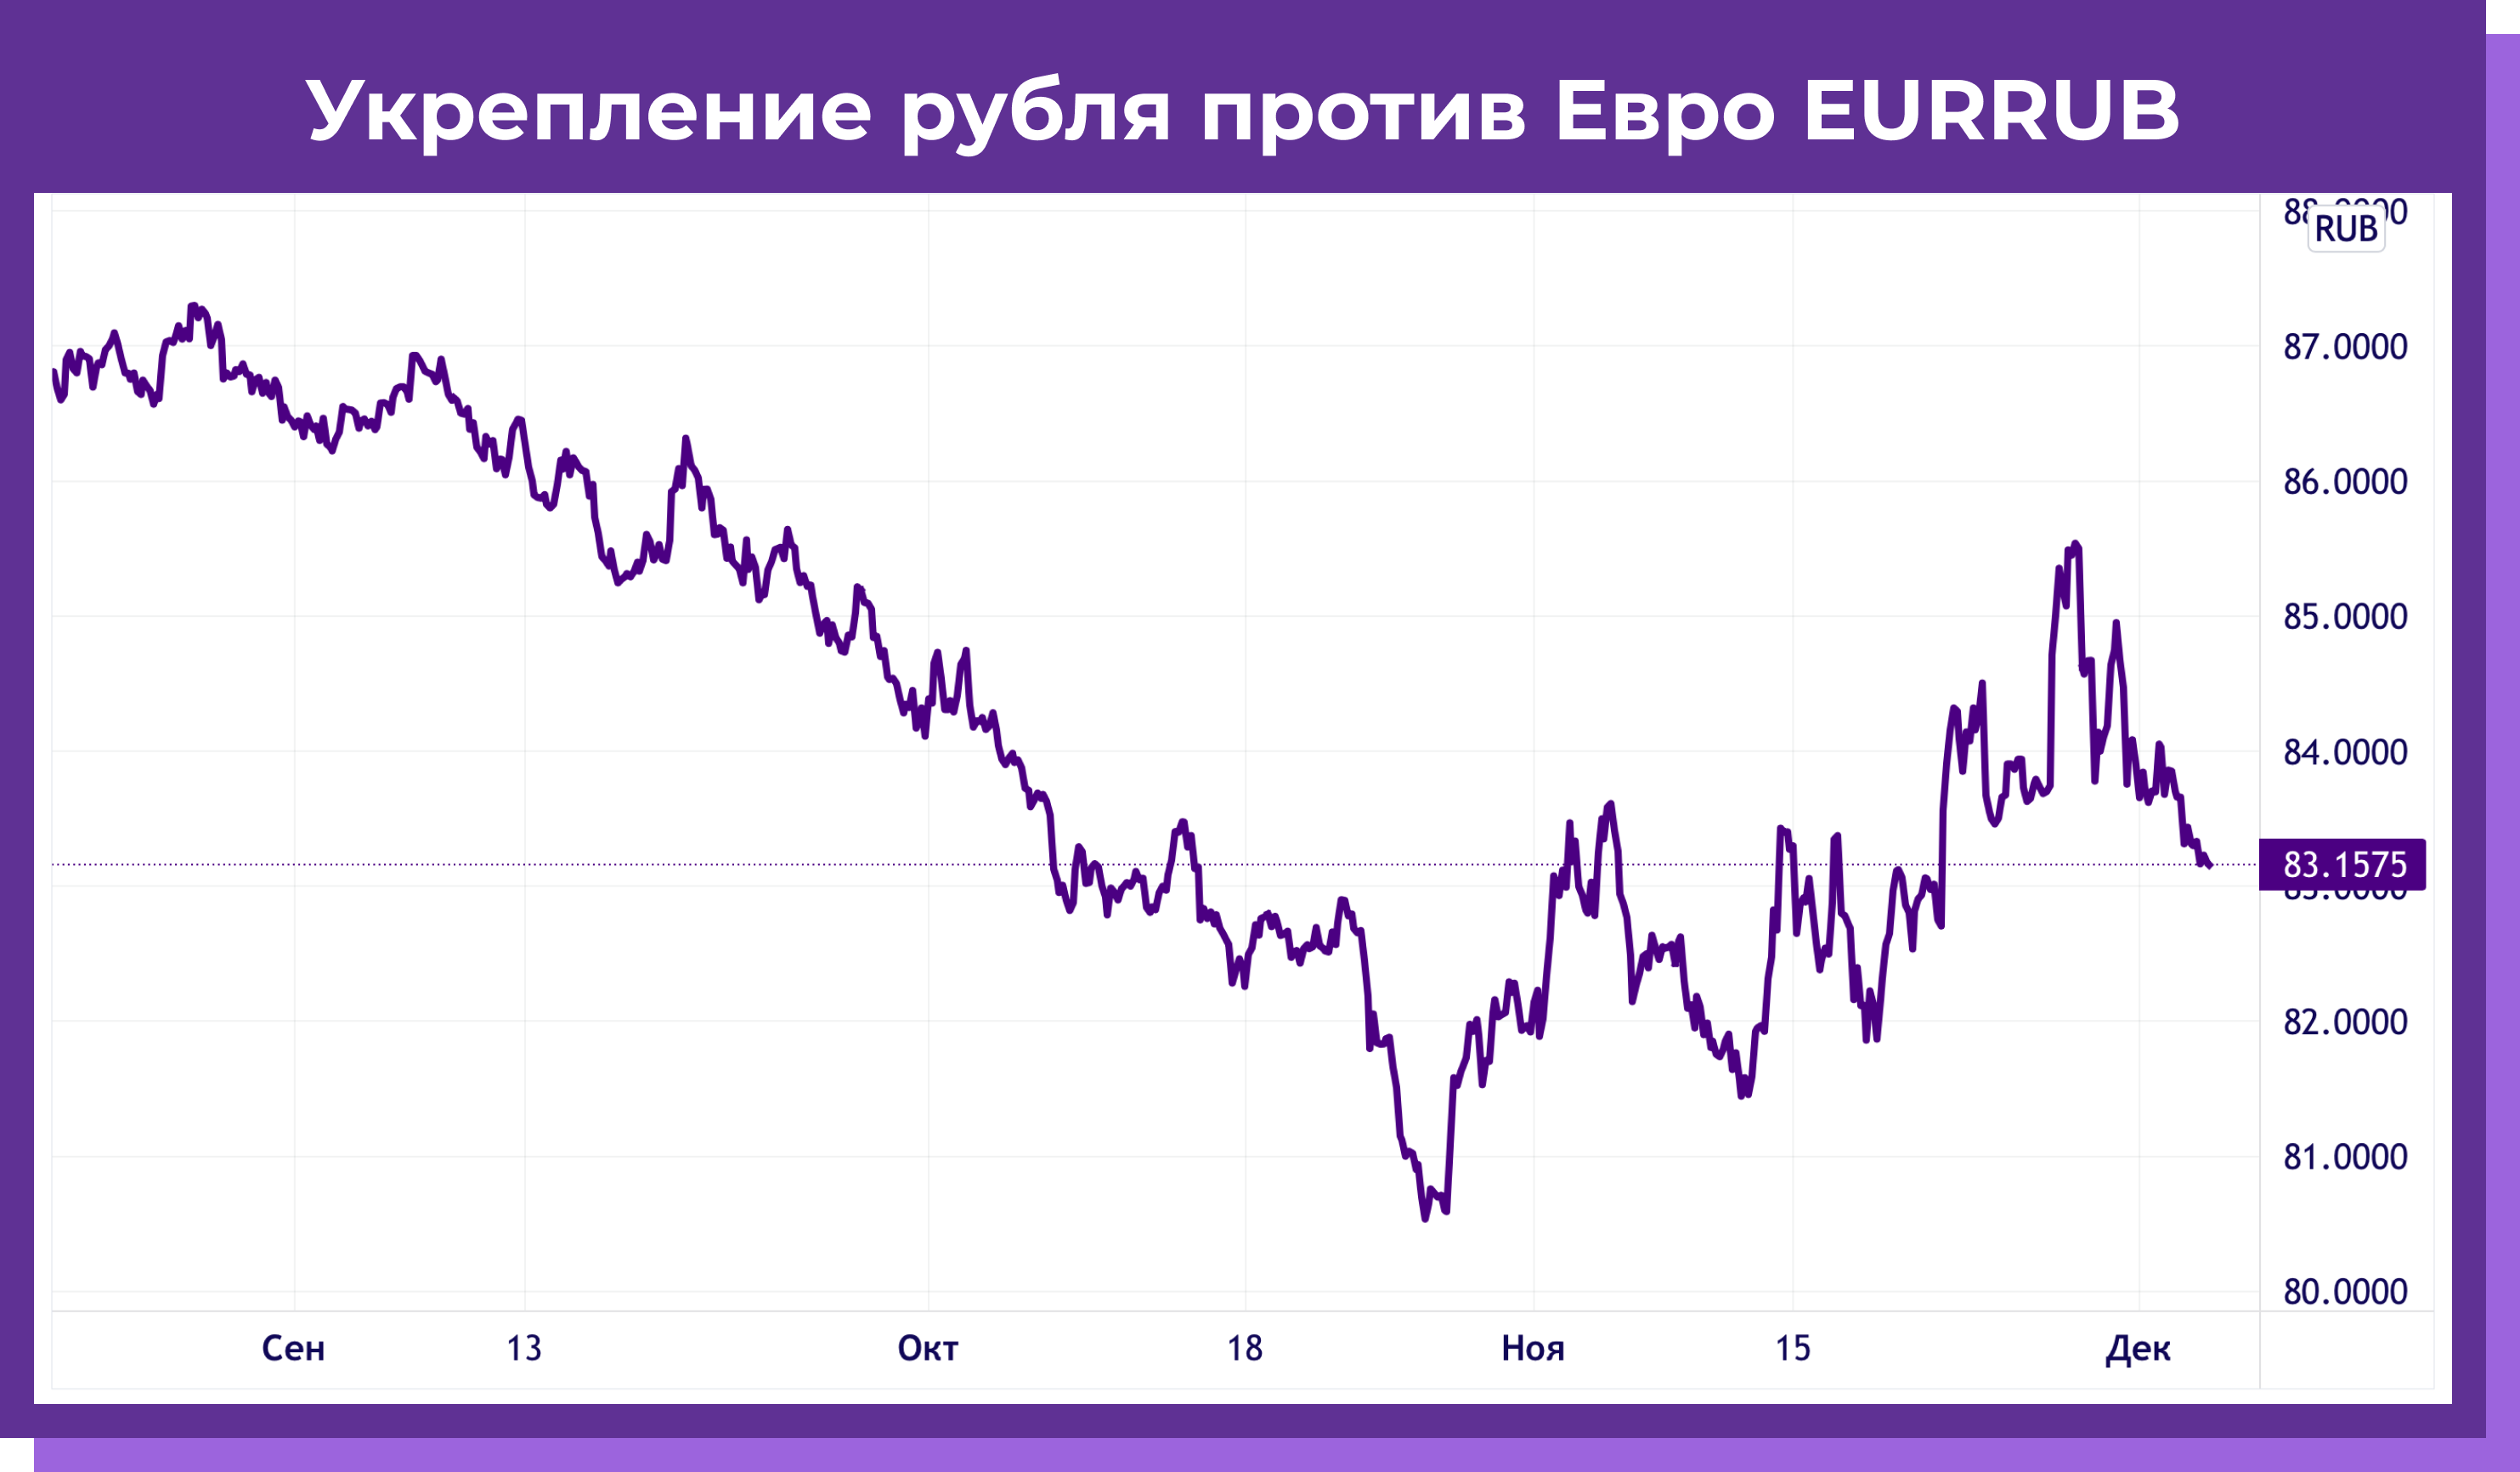 Рис. 8. Укрепление рубля против Евро EURRUB